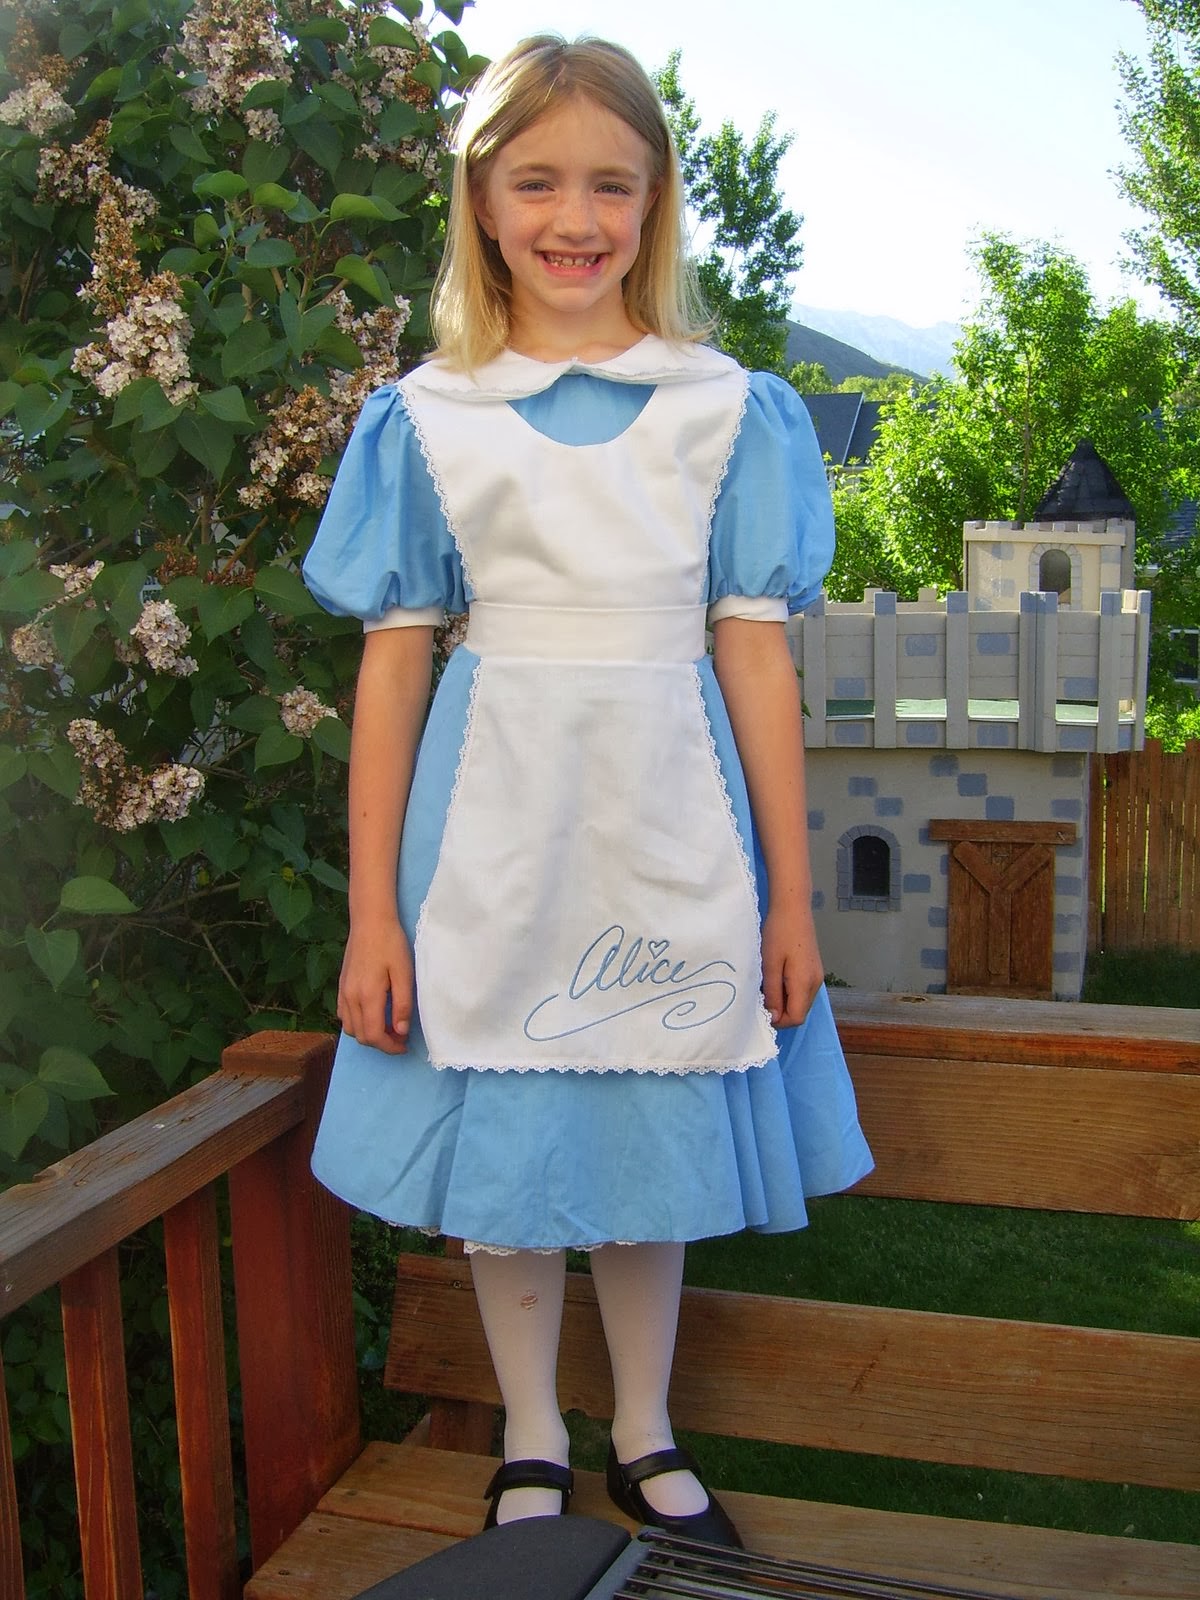 Cinderella and other Dangerous Disney Princesses